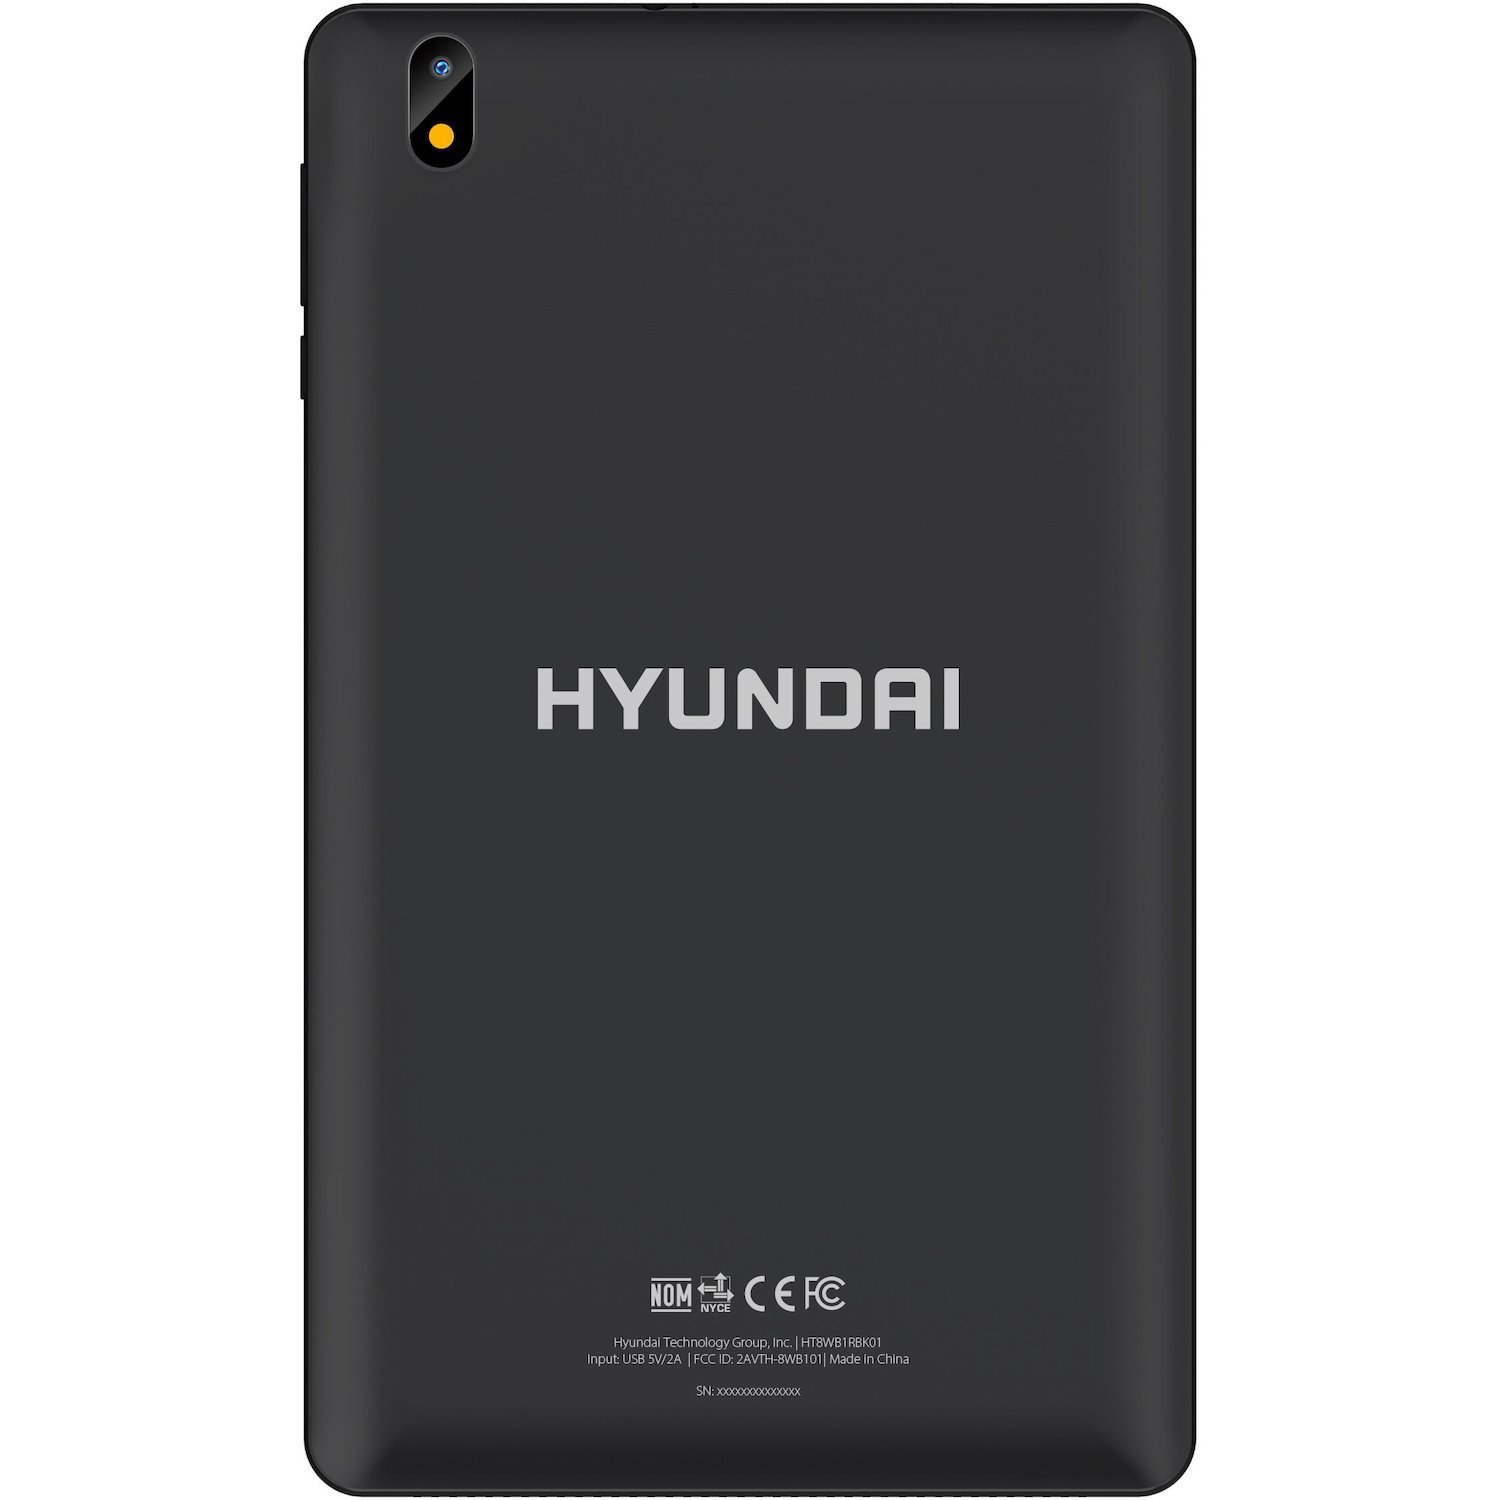 Hyundai HYtab Pro 8WB1, 8" FHD IPS, Quad-Core Processor, Android 11, 3GB RAM, 32GB Storage, 2MP/5MP, WiFi, Black